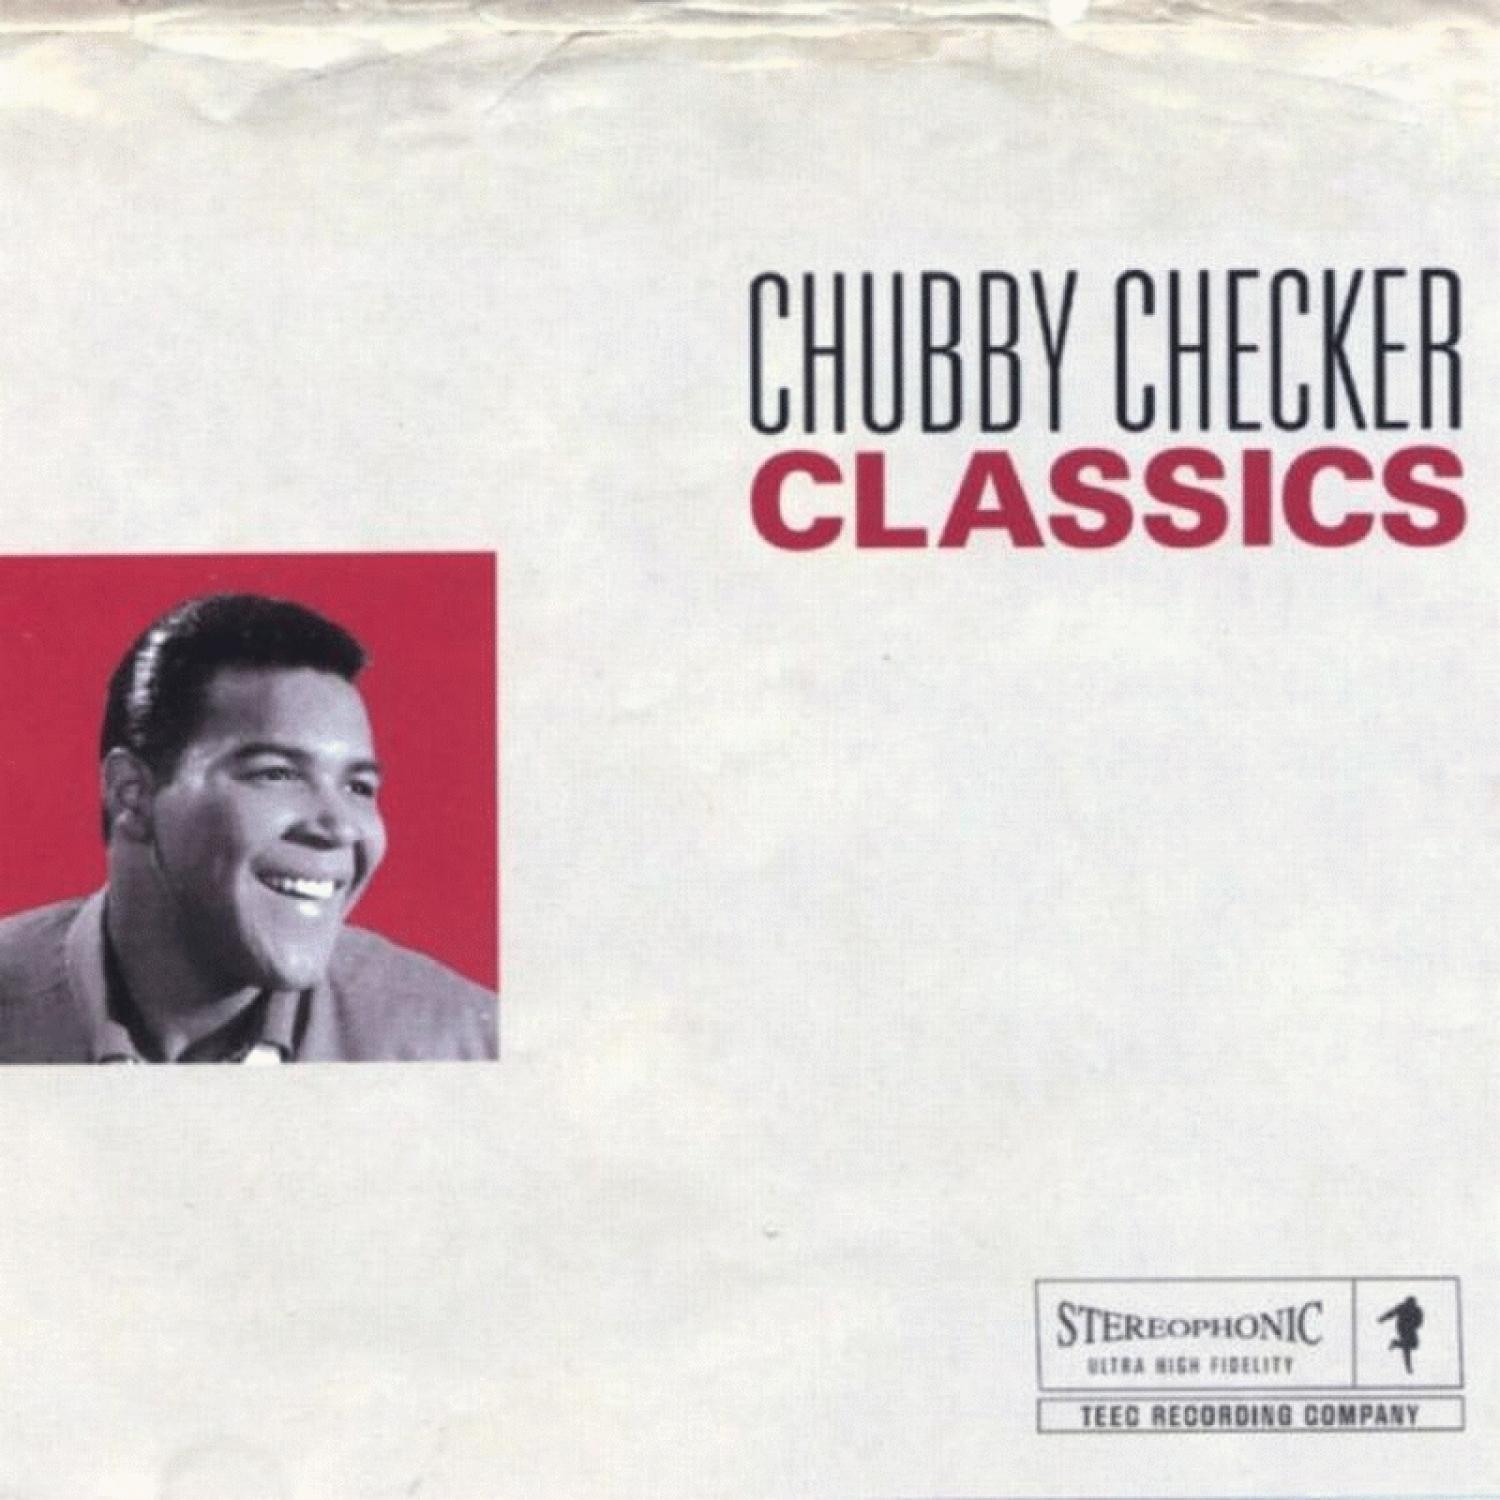 Chubby Checker - Popeye the Hitchiker